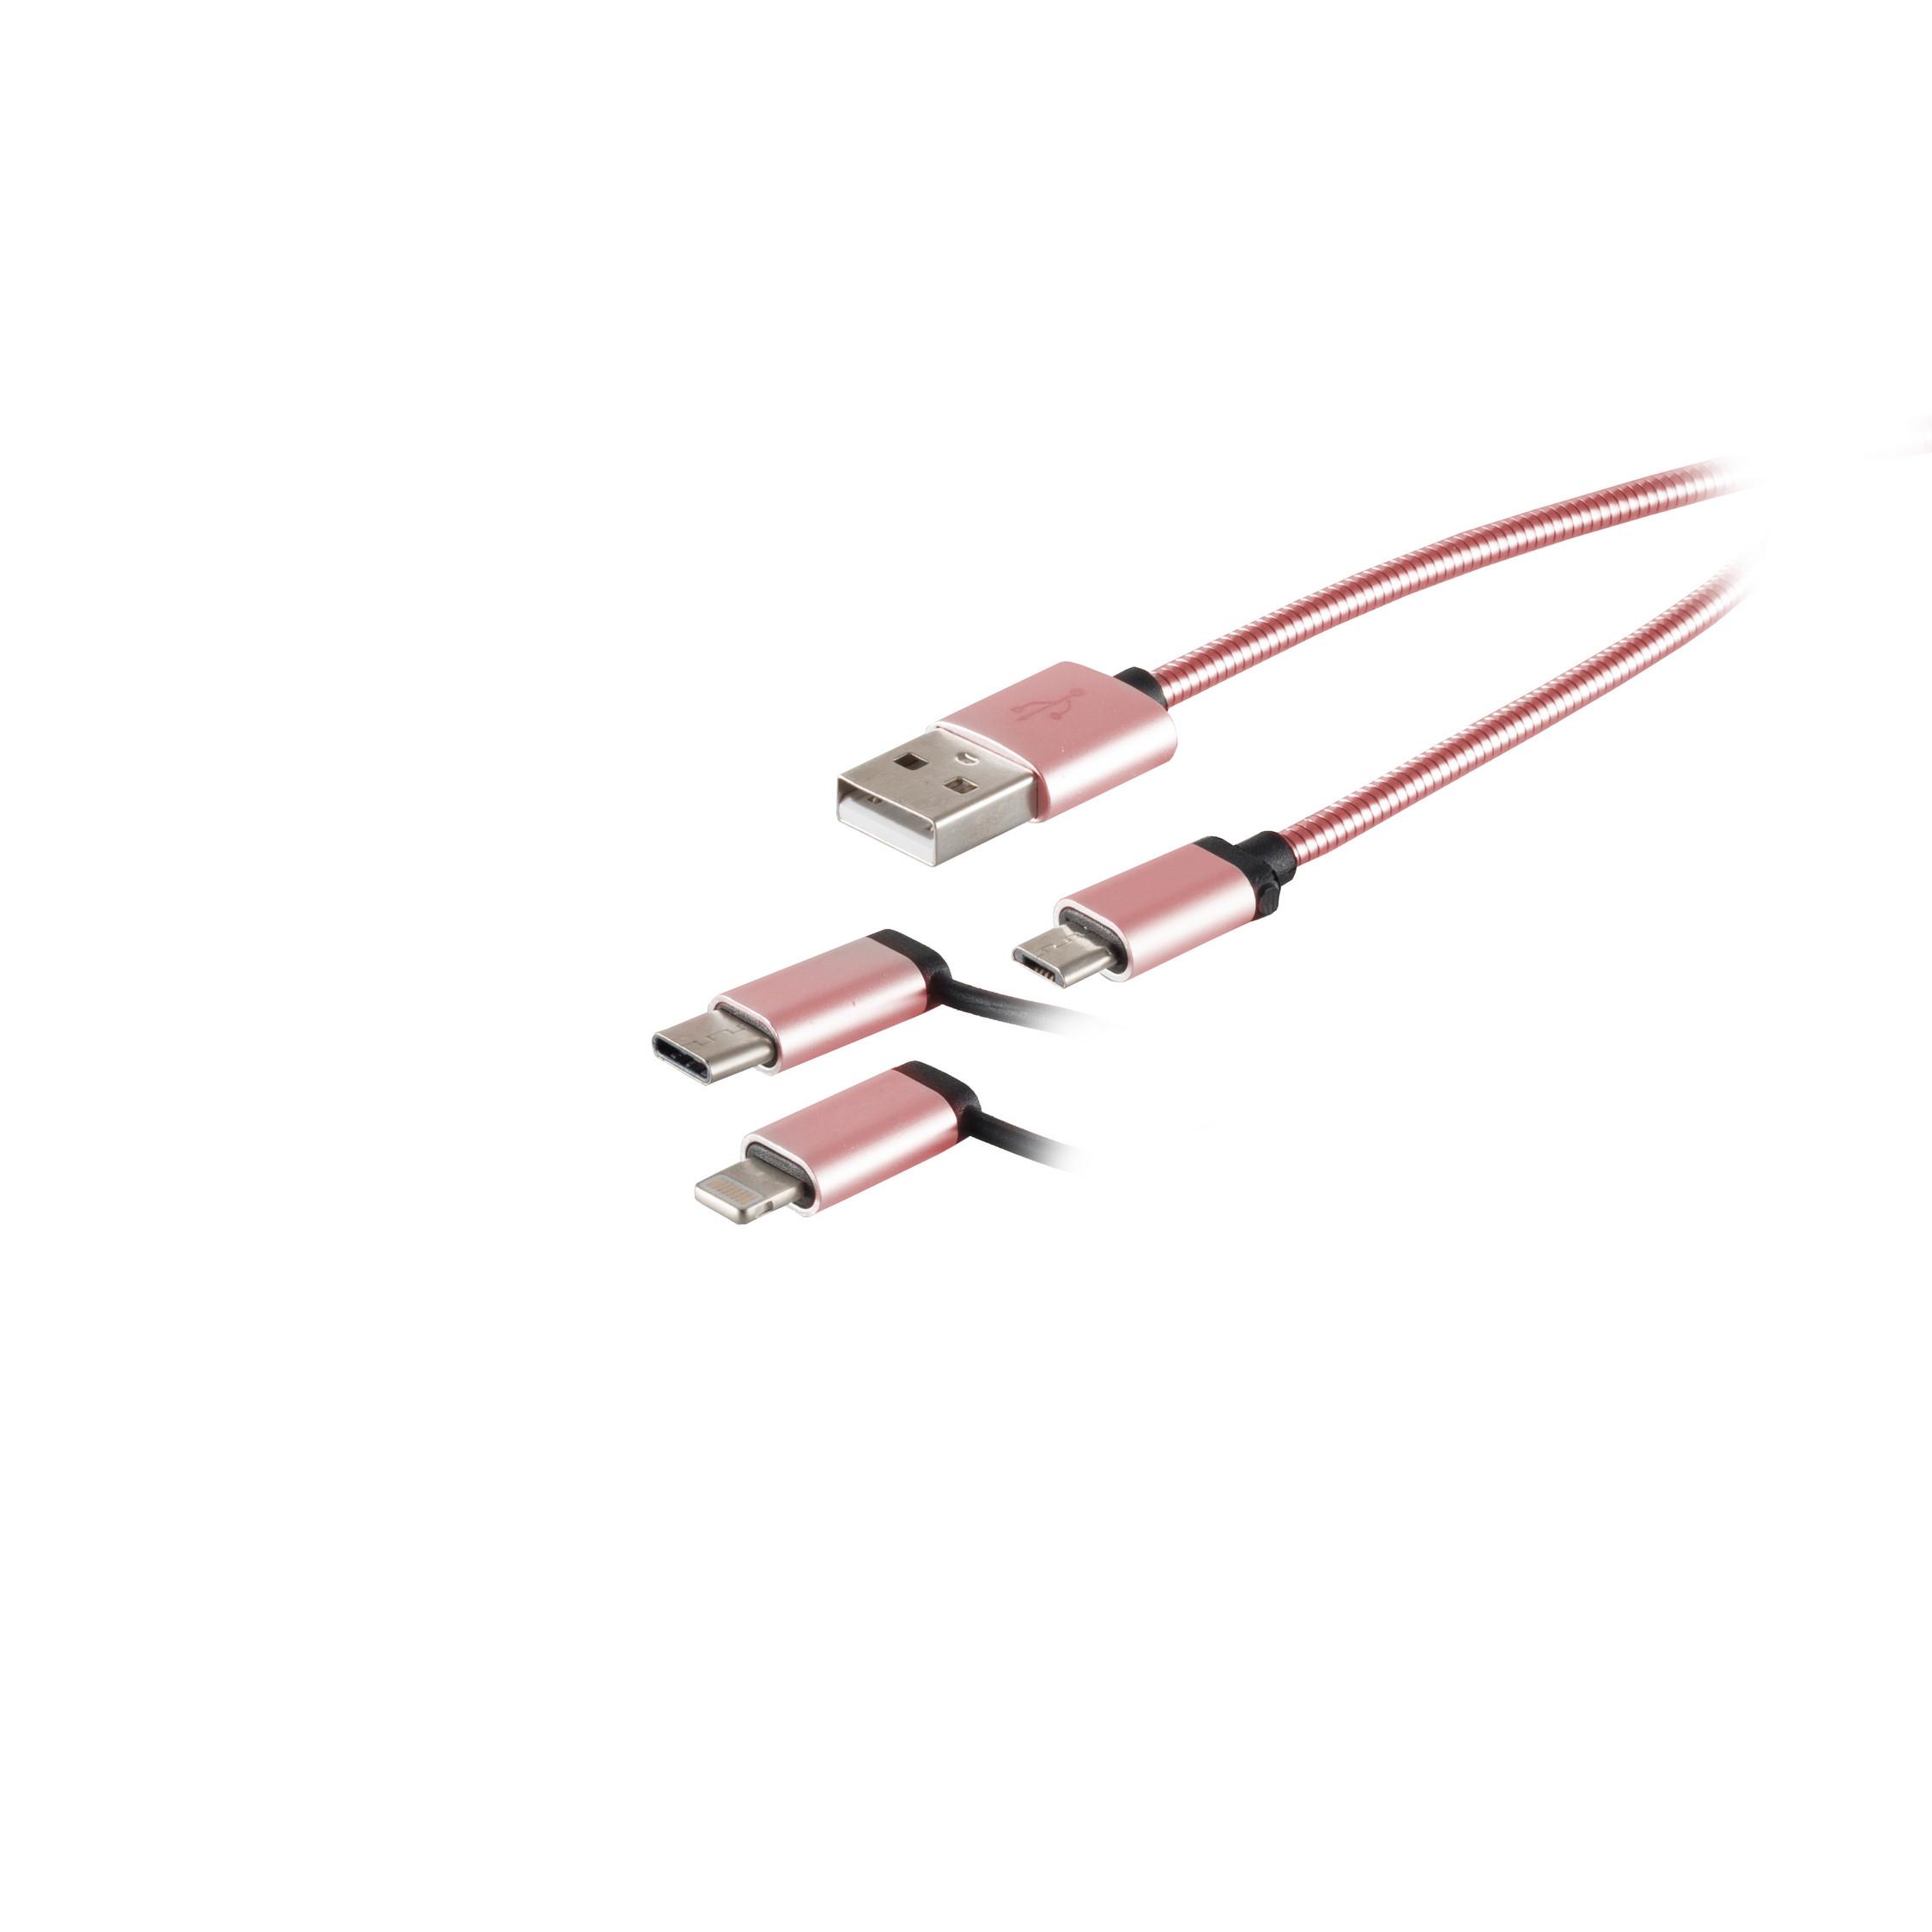 MAXIMUM 1m USB MicroB/ Ladekabel Stecker 8-pin Kabel TypC/ CONNECTIVITY S/CONN 3in1